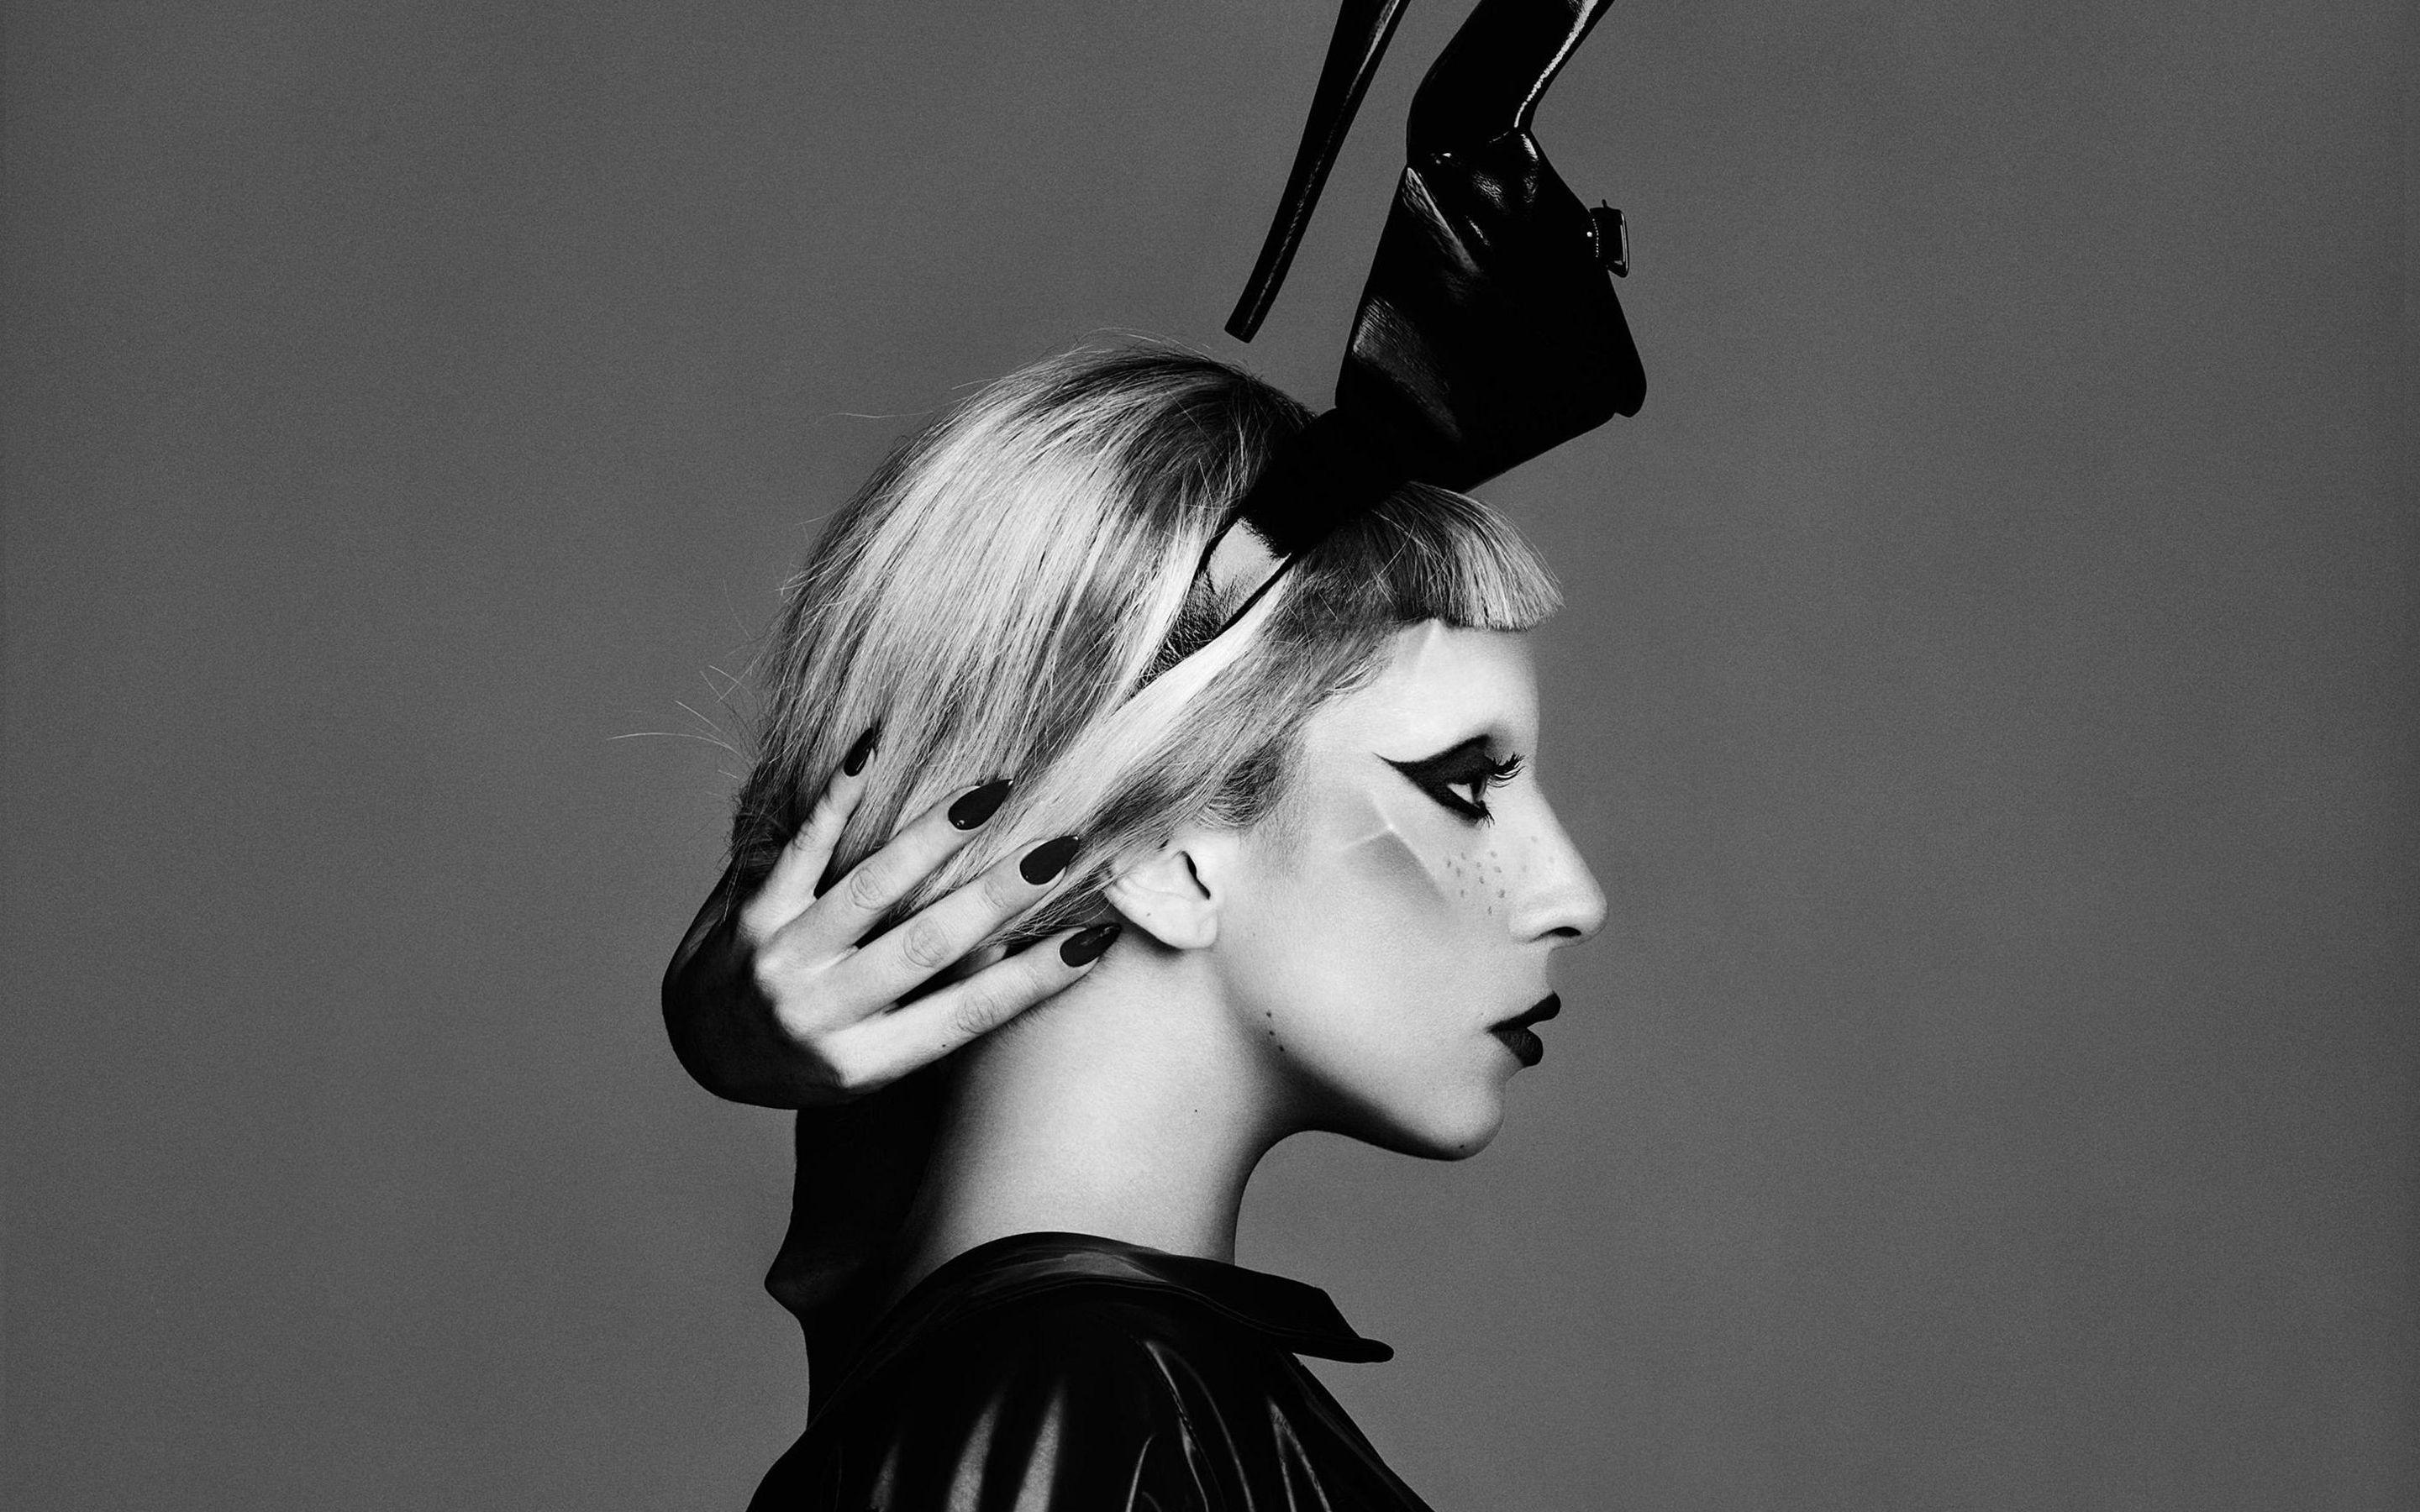 Lady Gaga Wallpaper 40907 2880x1800 px